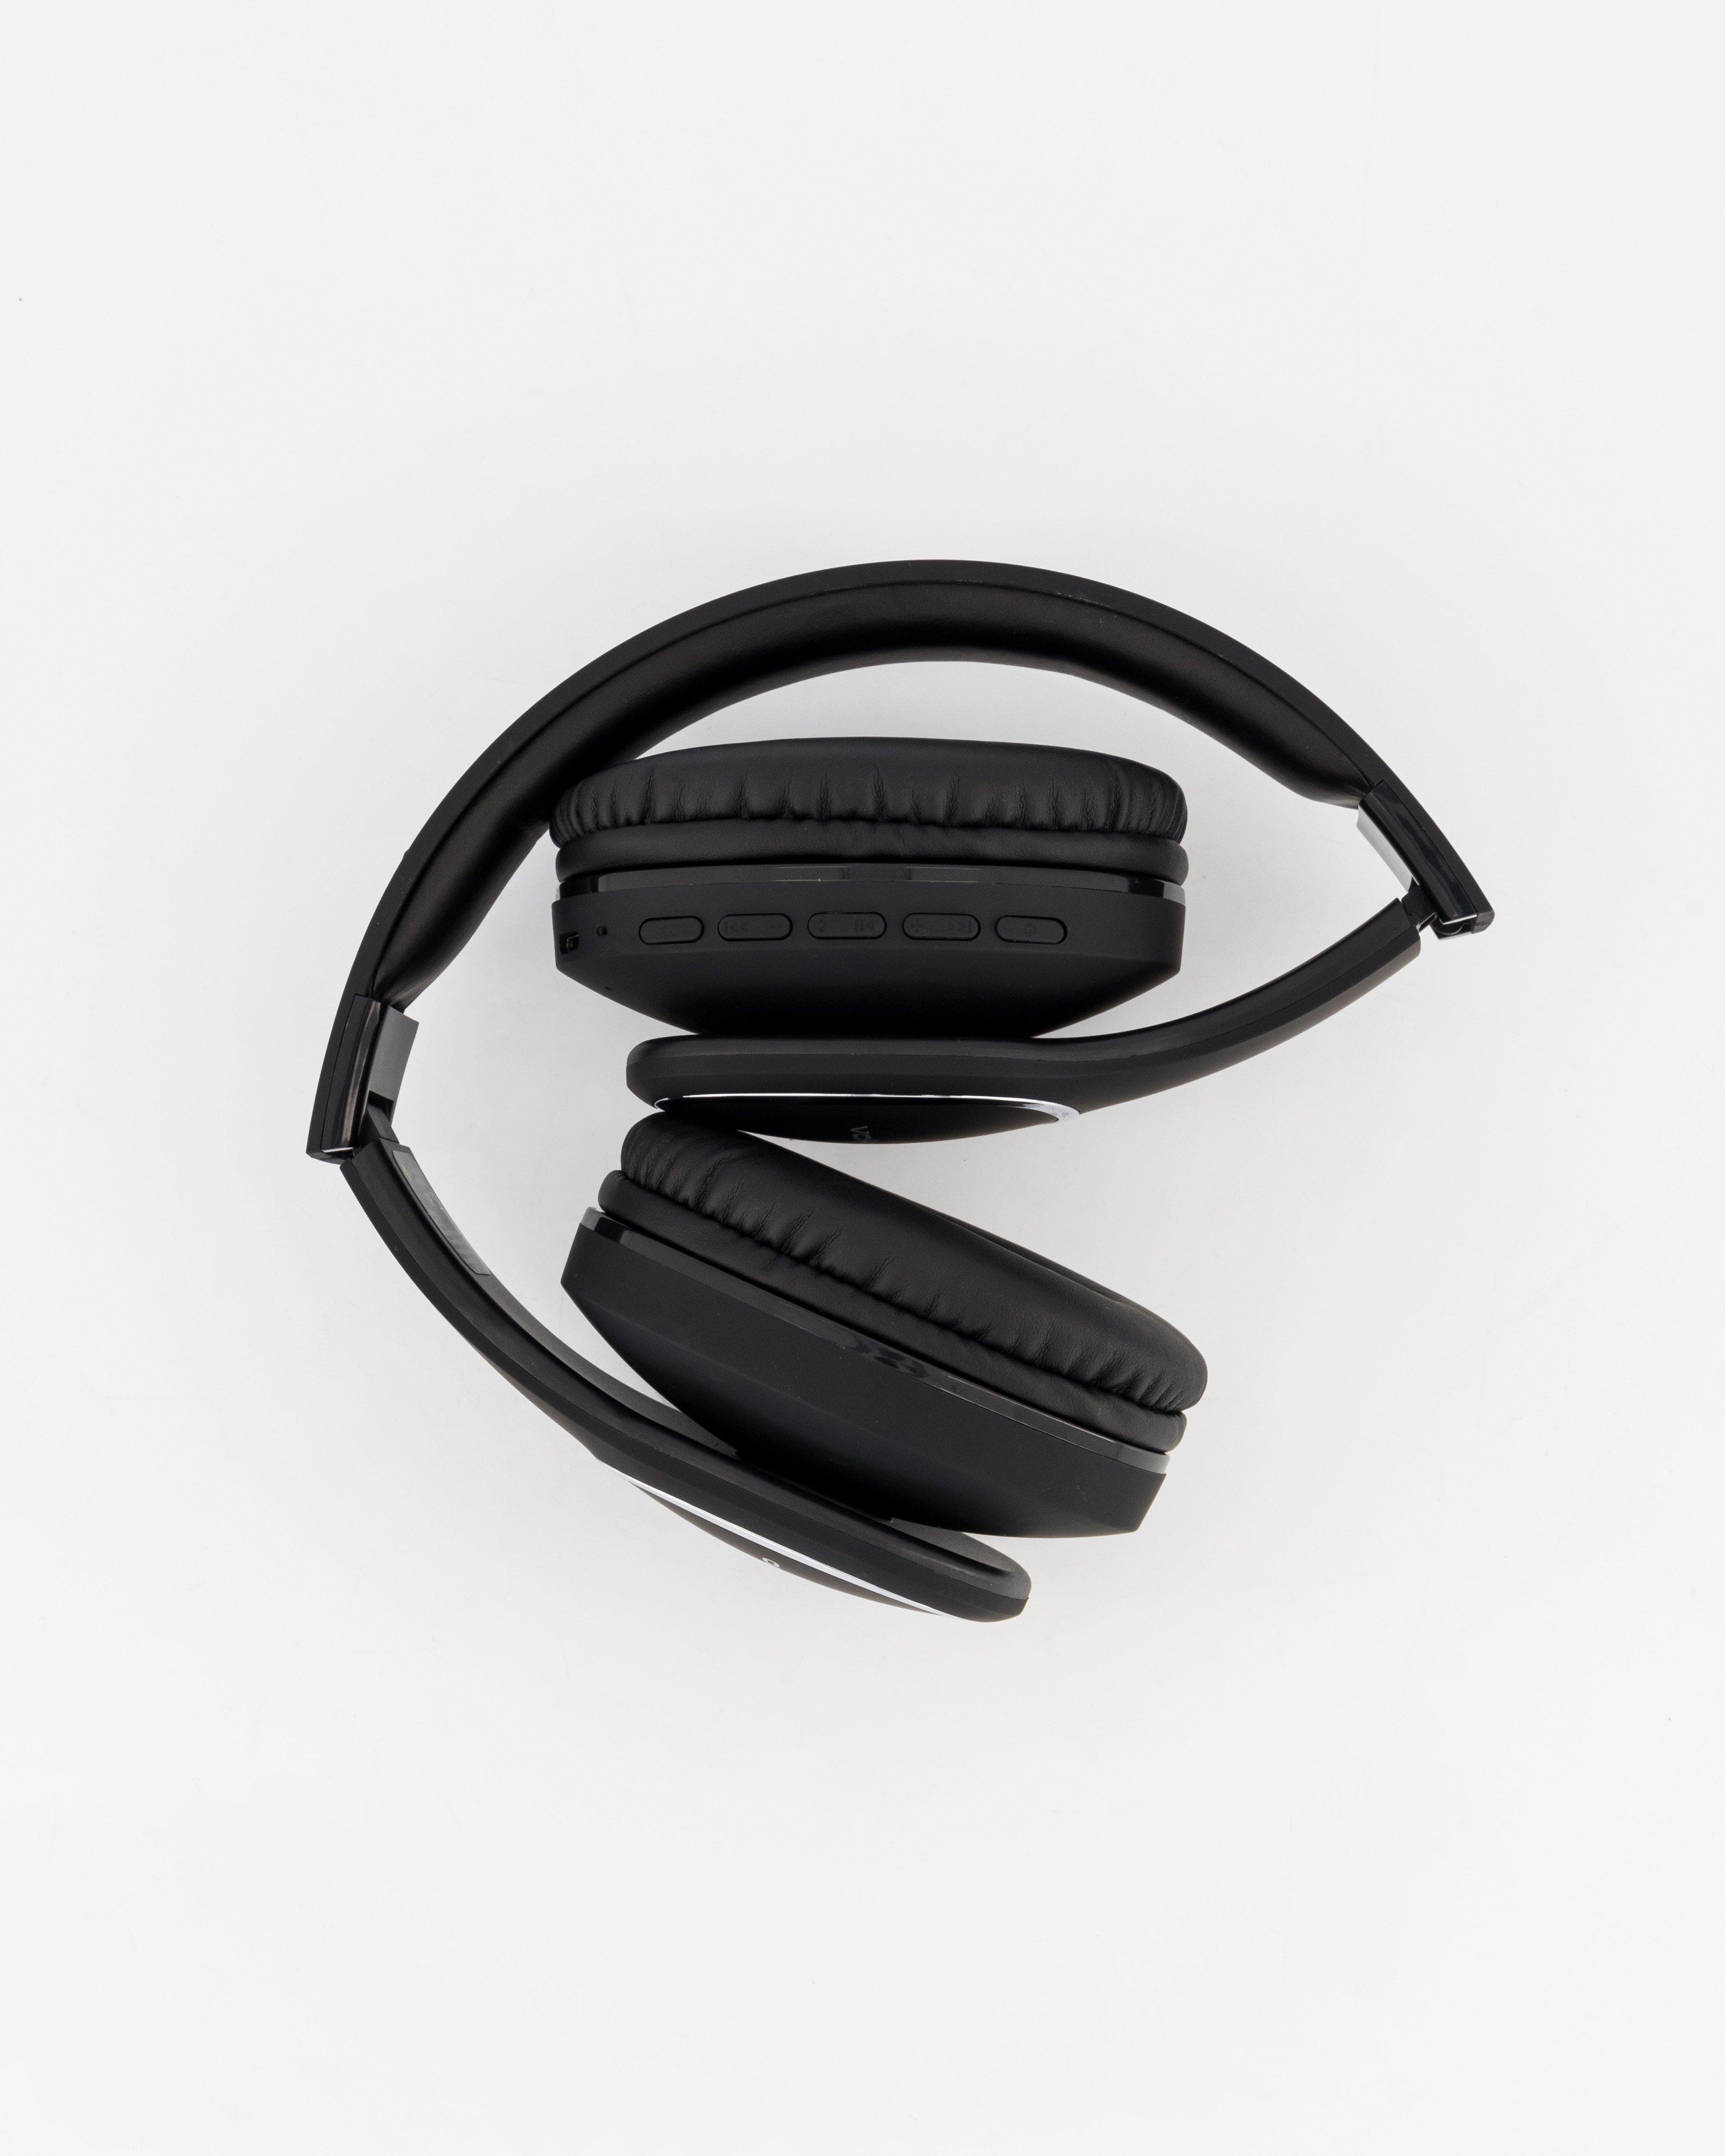 Volkano Phonic Over-Ear Headphones -  Black